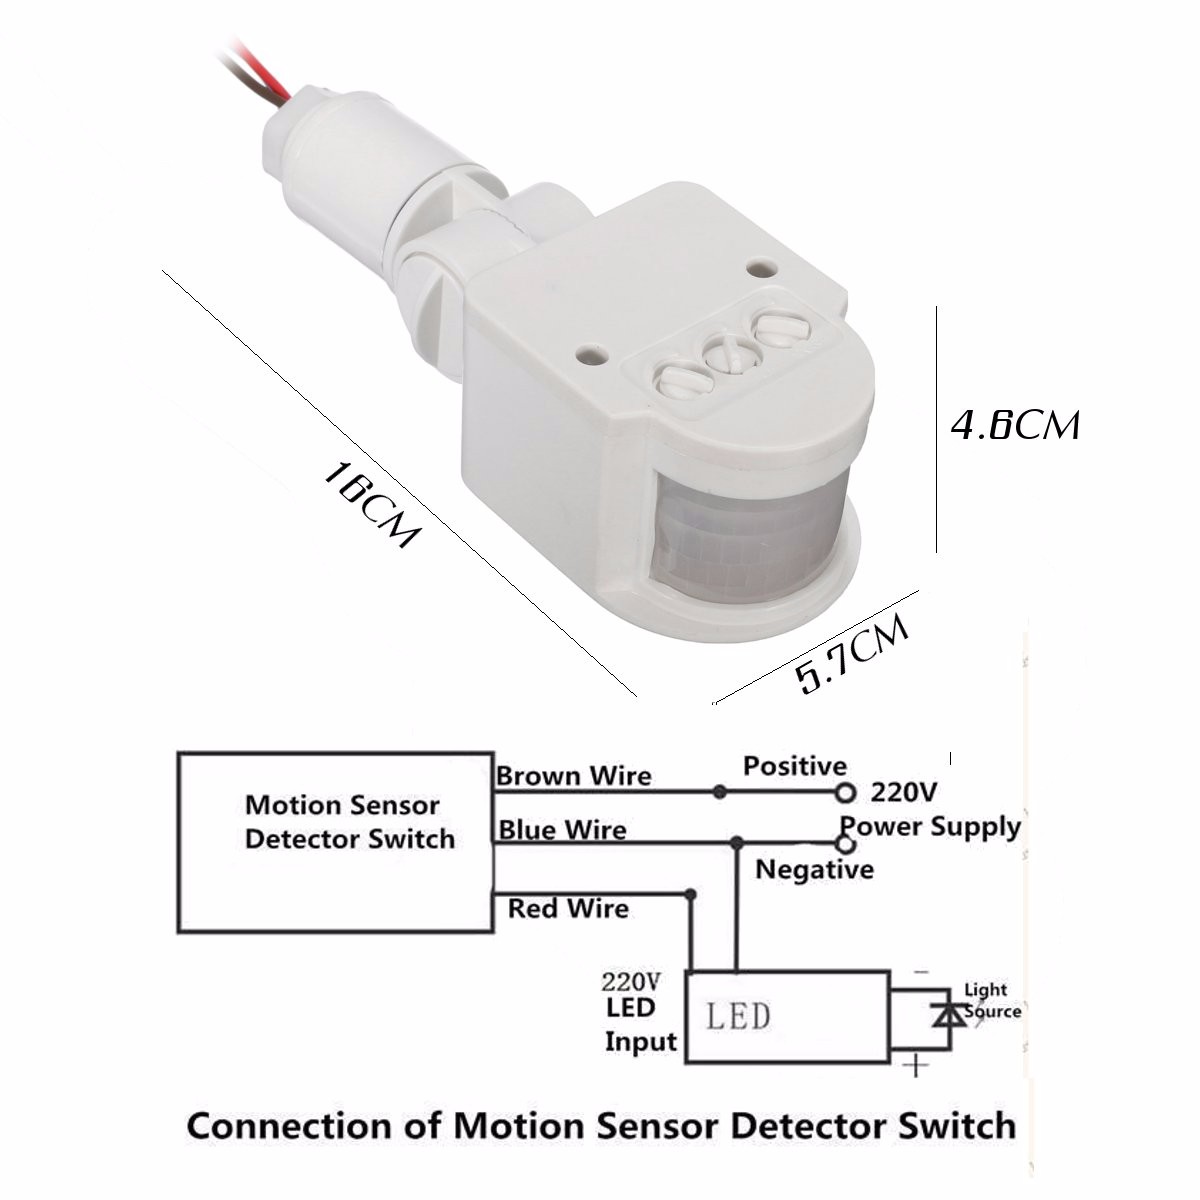 Motion Sensor Wiring Diagram from img.staticbg.com